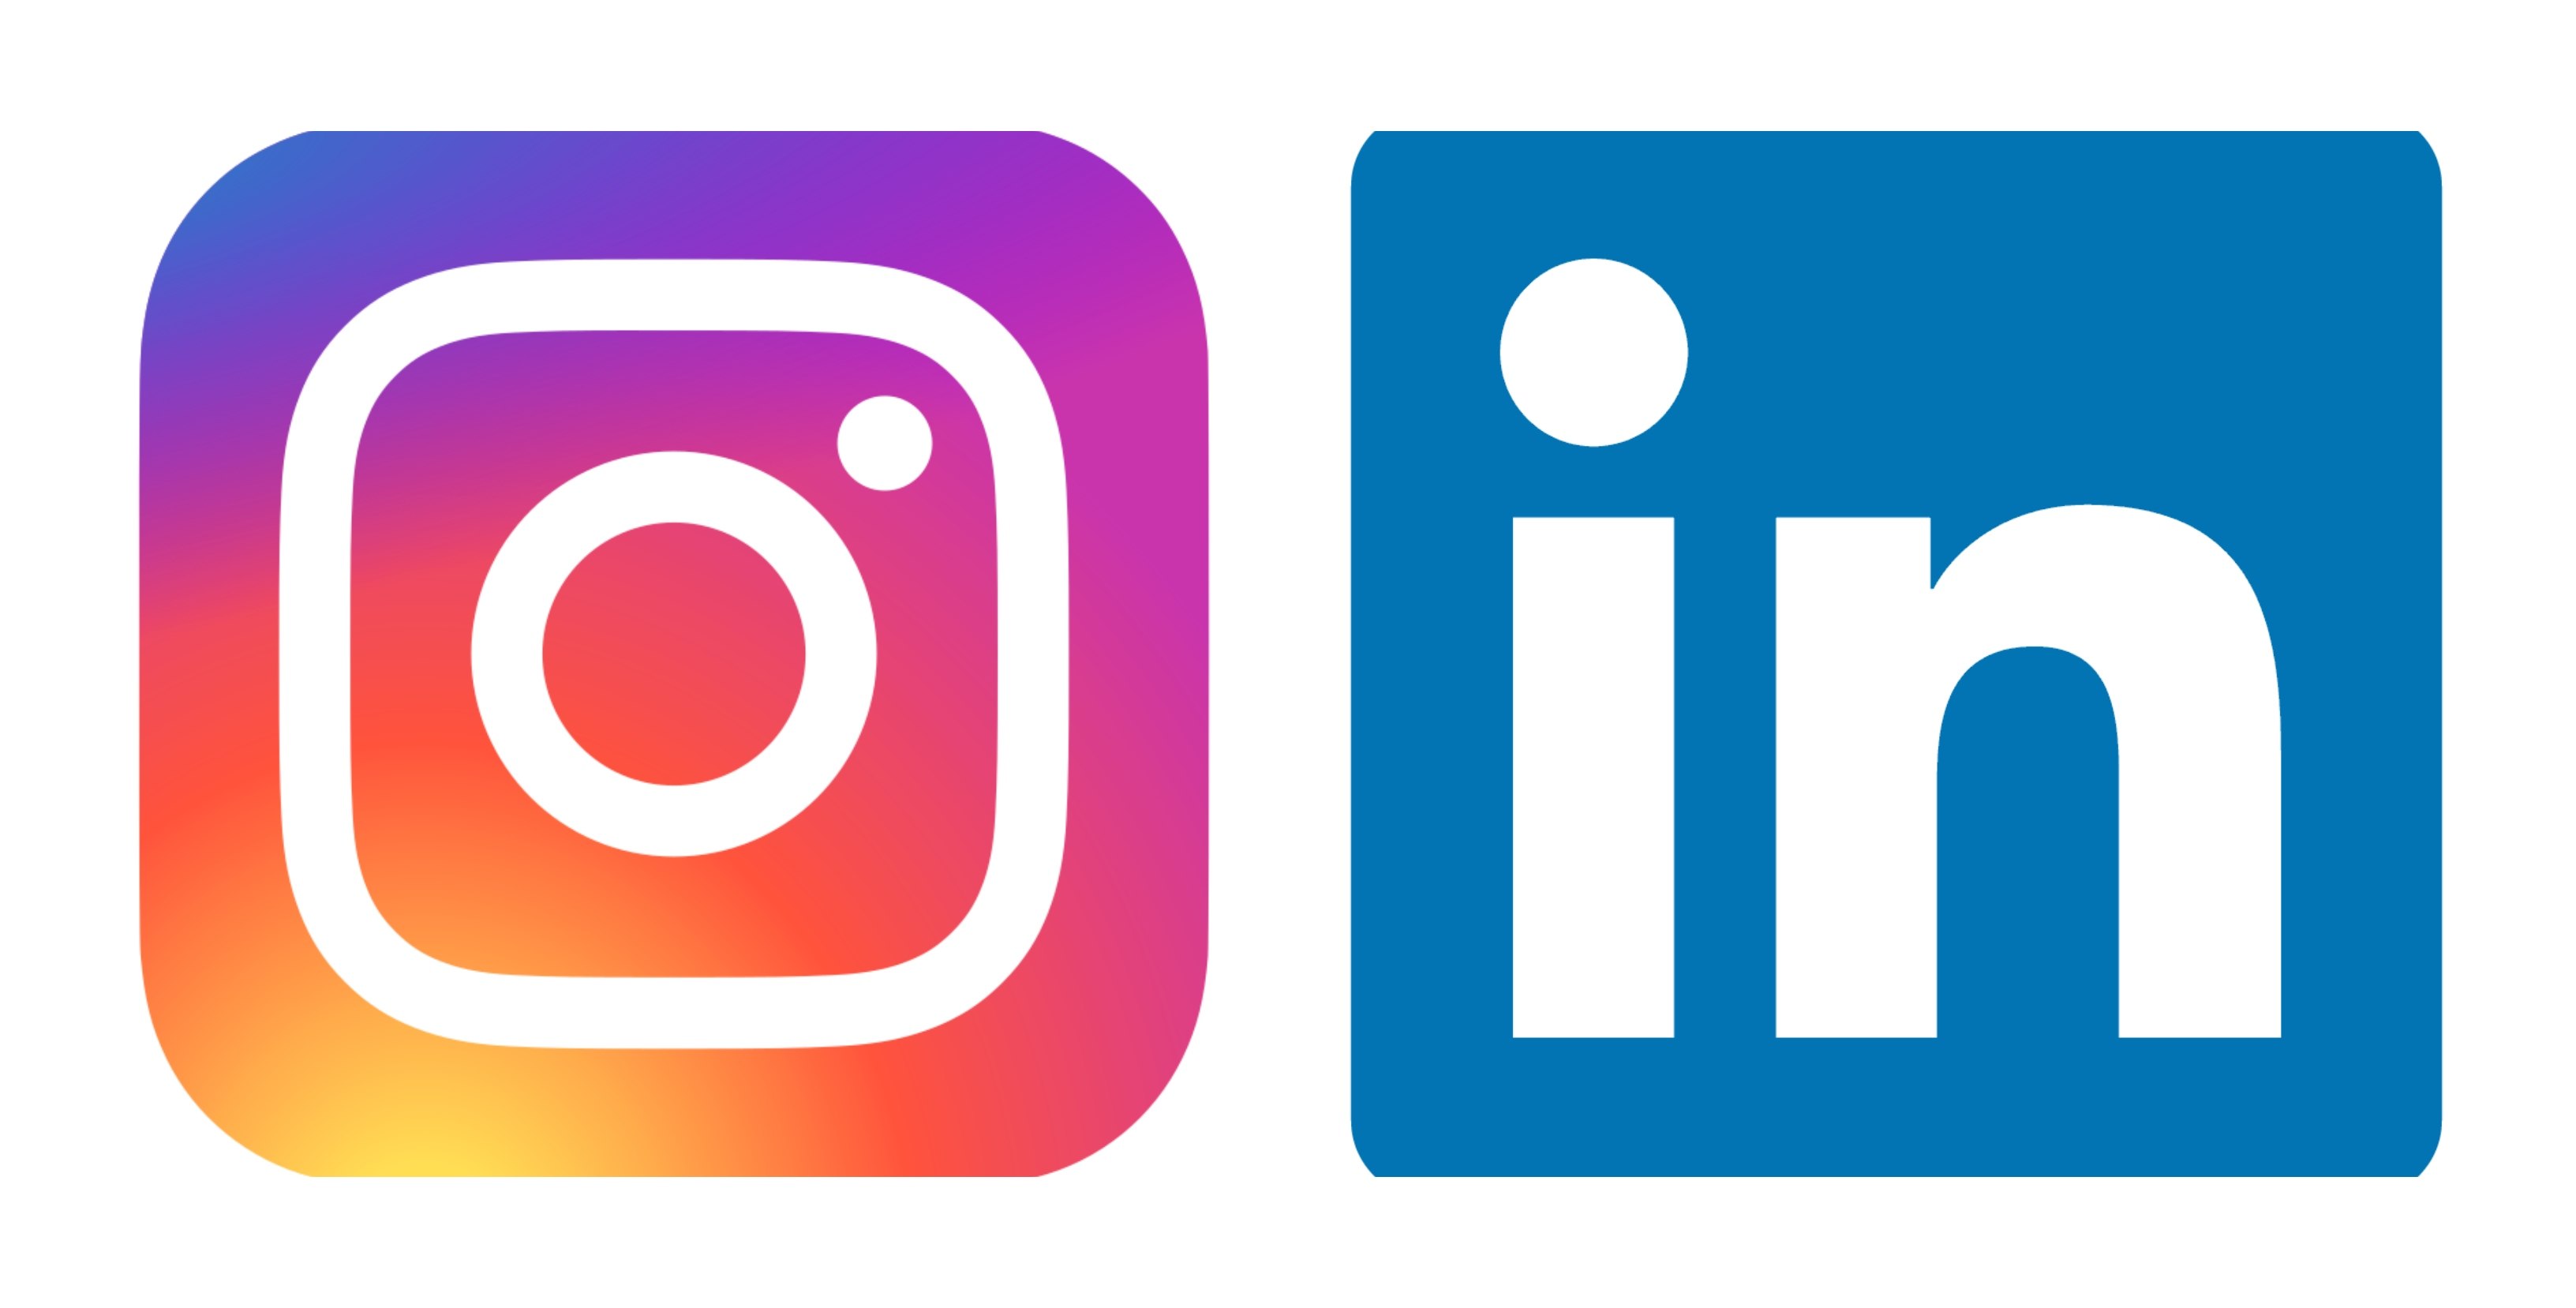 Instagram and linkdin logos